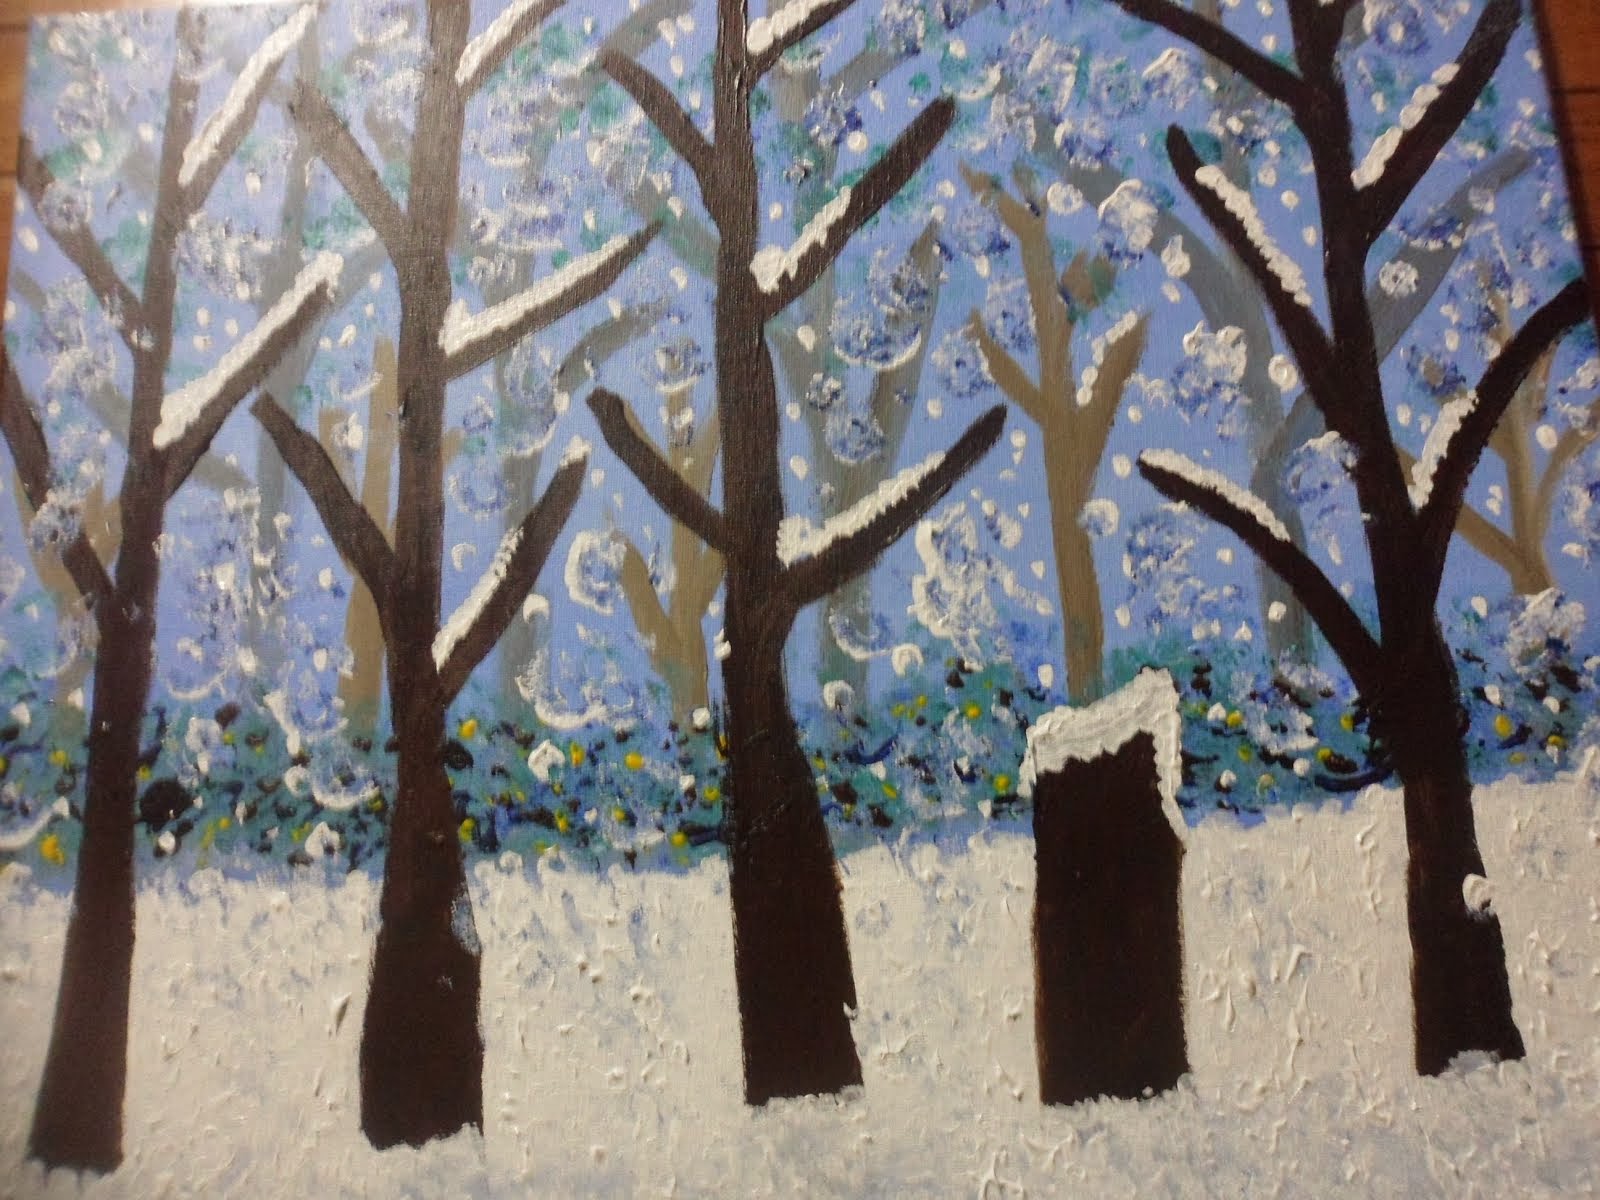 A Winter Scene by Malinda Miles